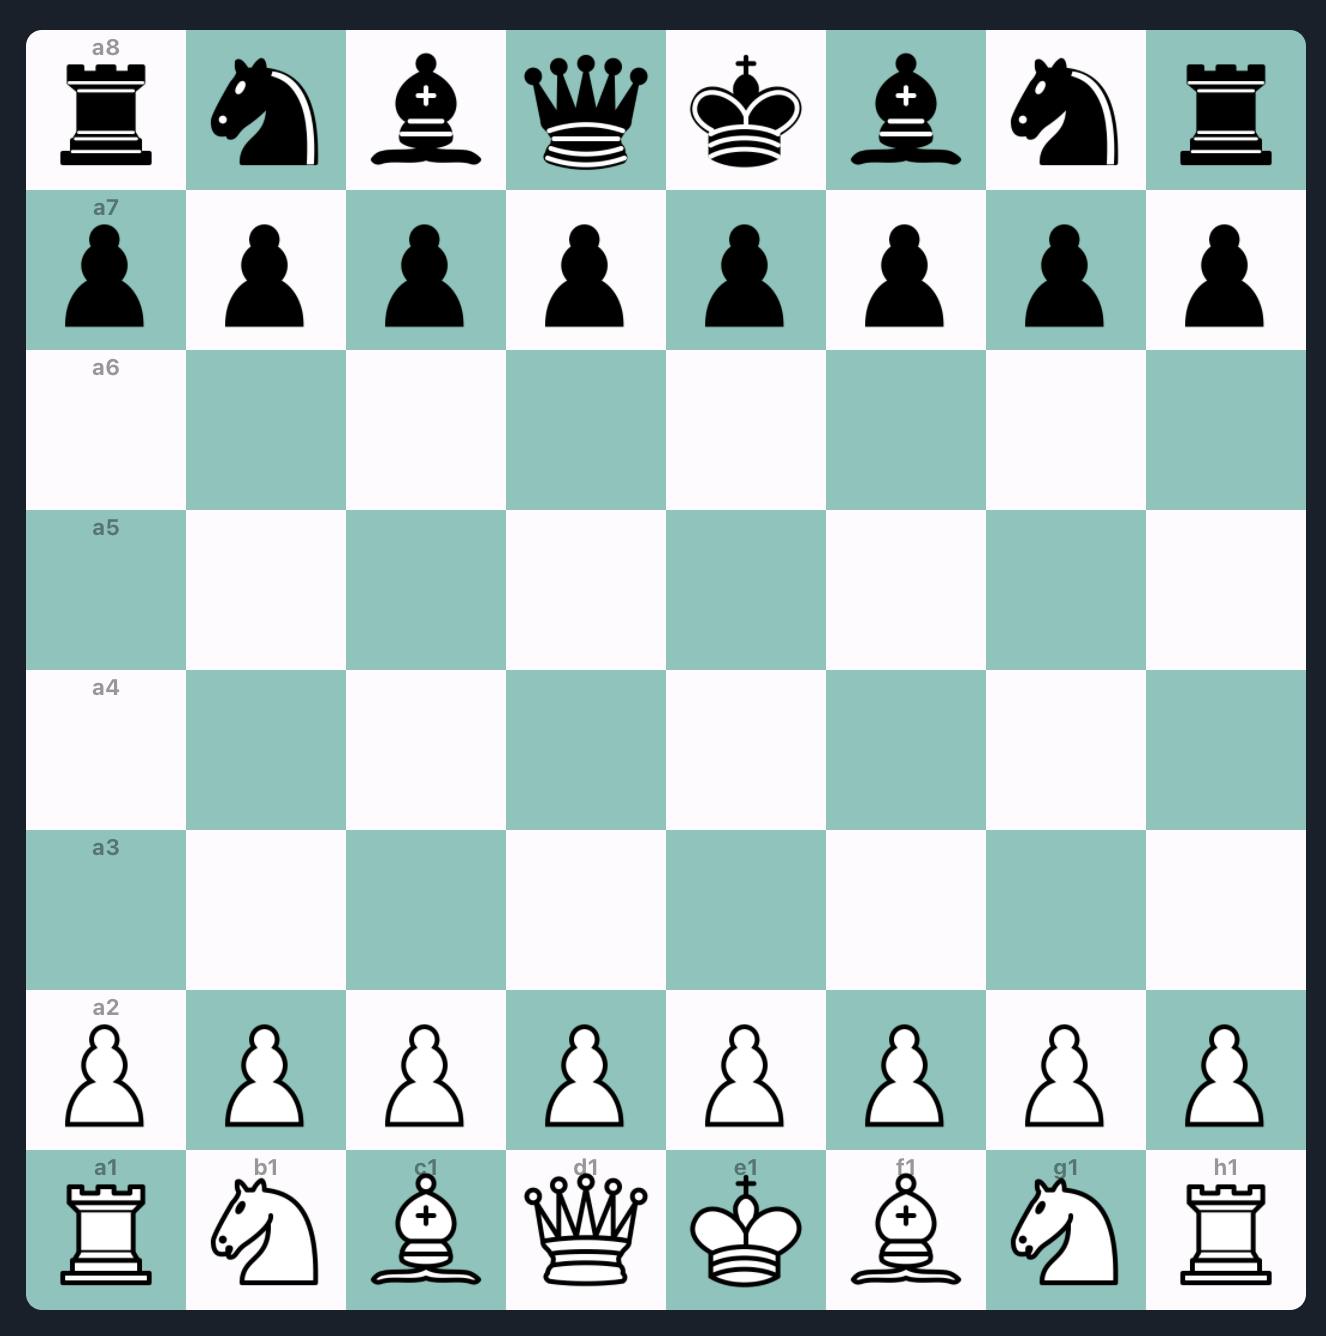 SFU student creates his own chess engine